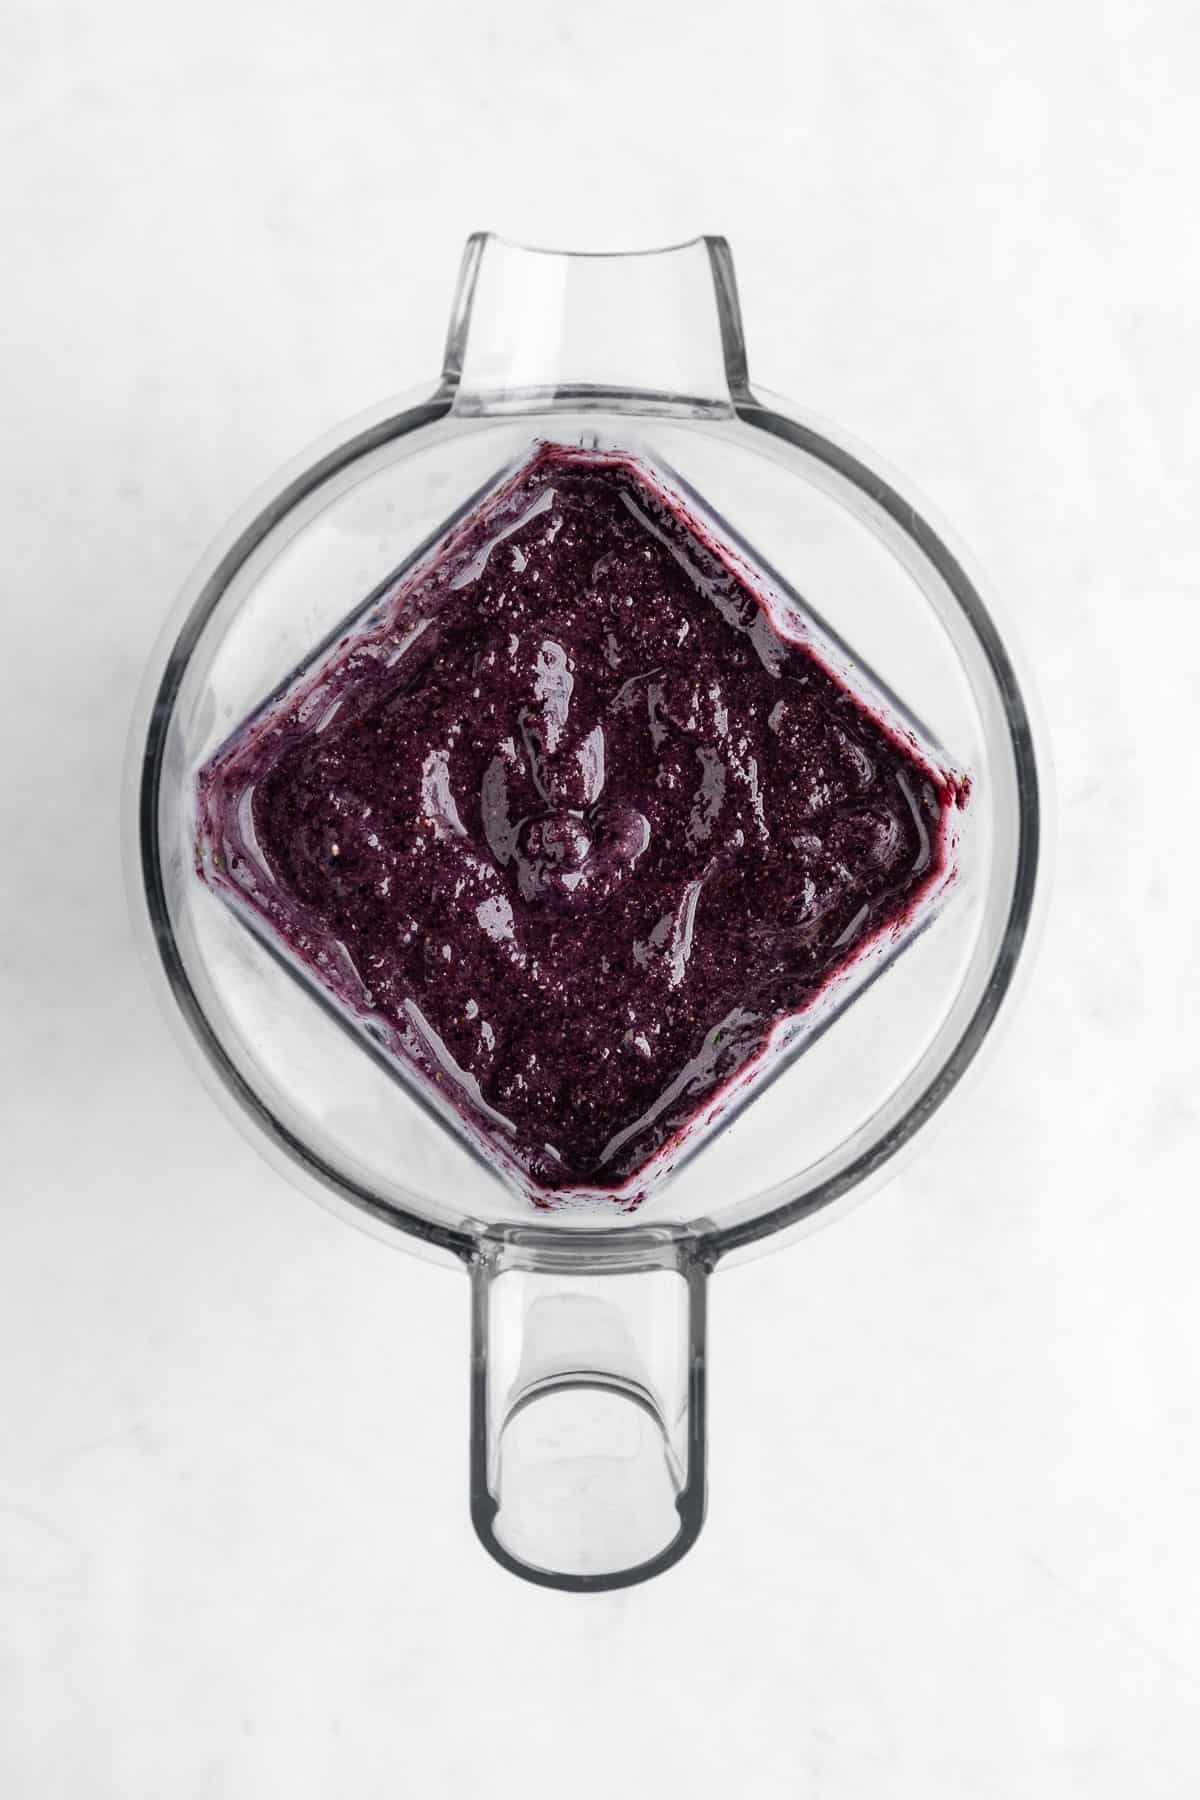 blended blueberry spinach smoothie inside a vitamix blender